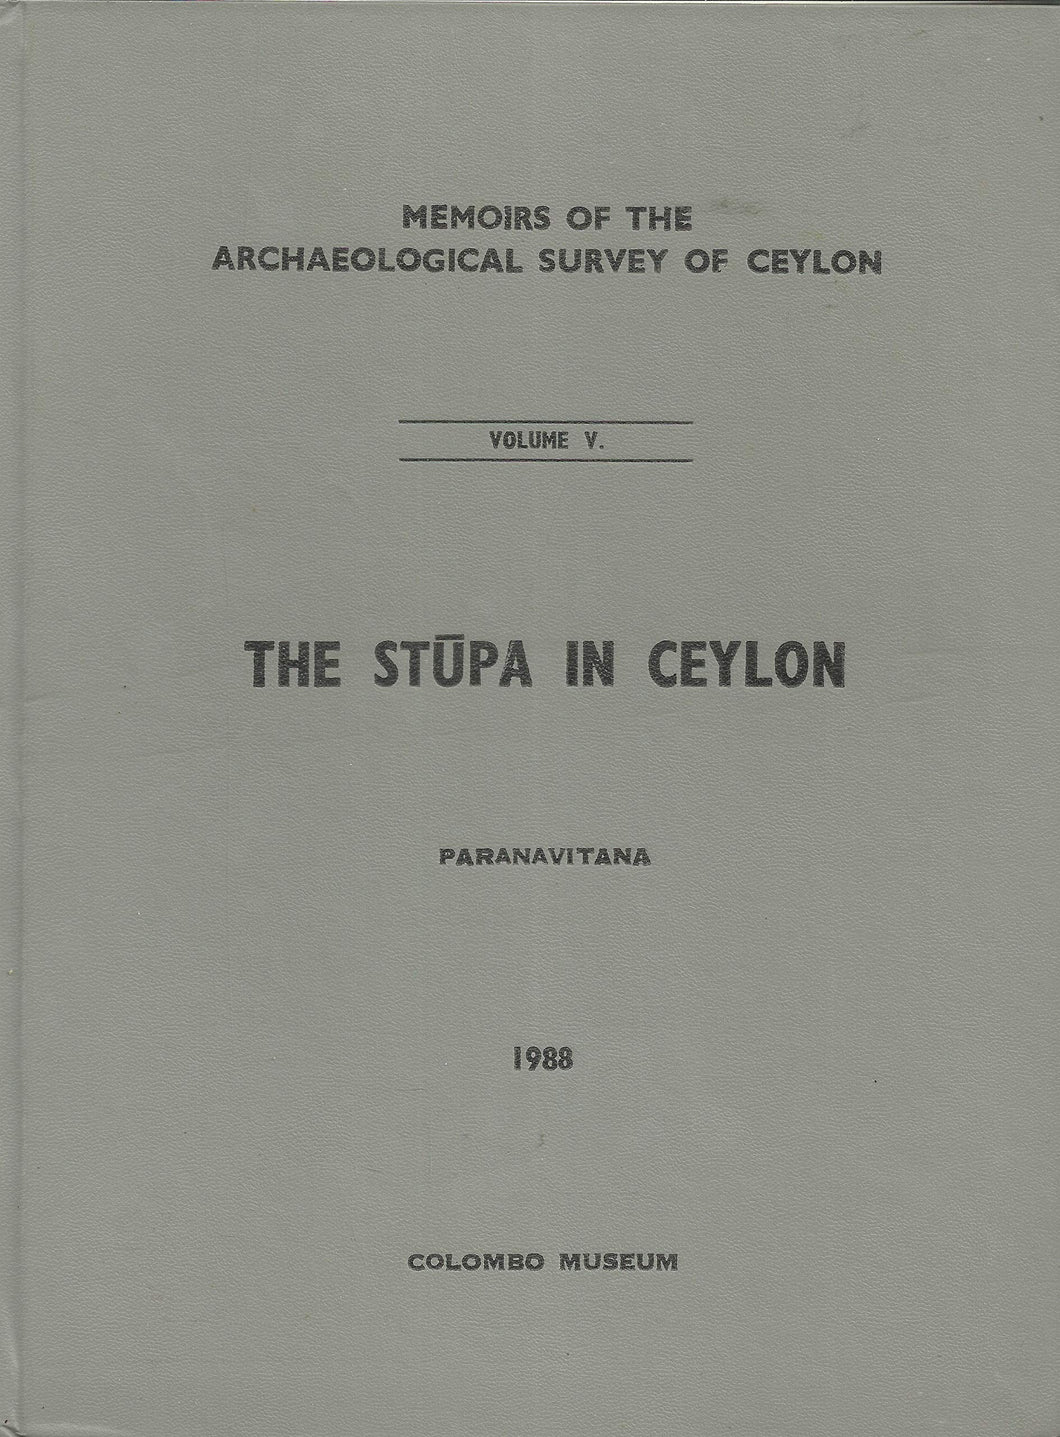 Memoirs of the Archaeological Survey of Ceylon, Volume V - The Stupa in Ceylon